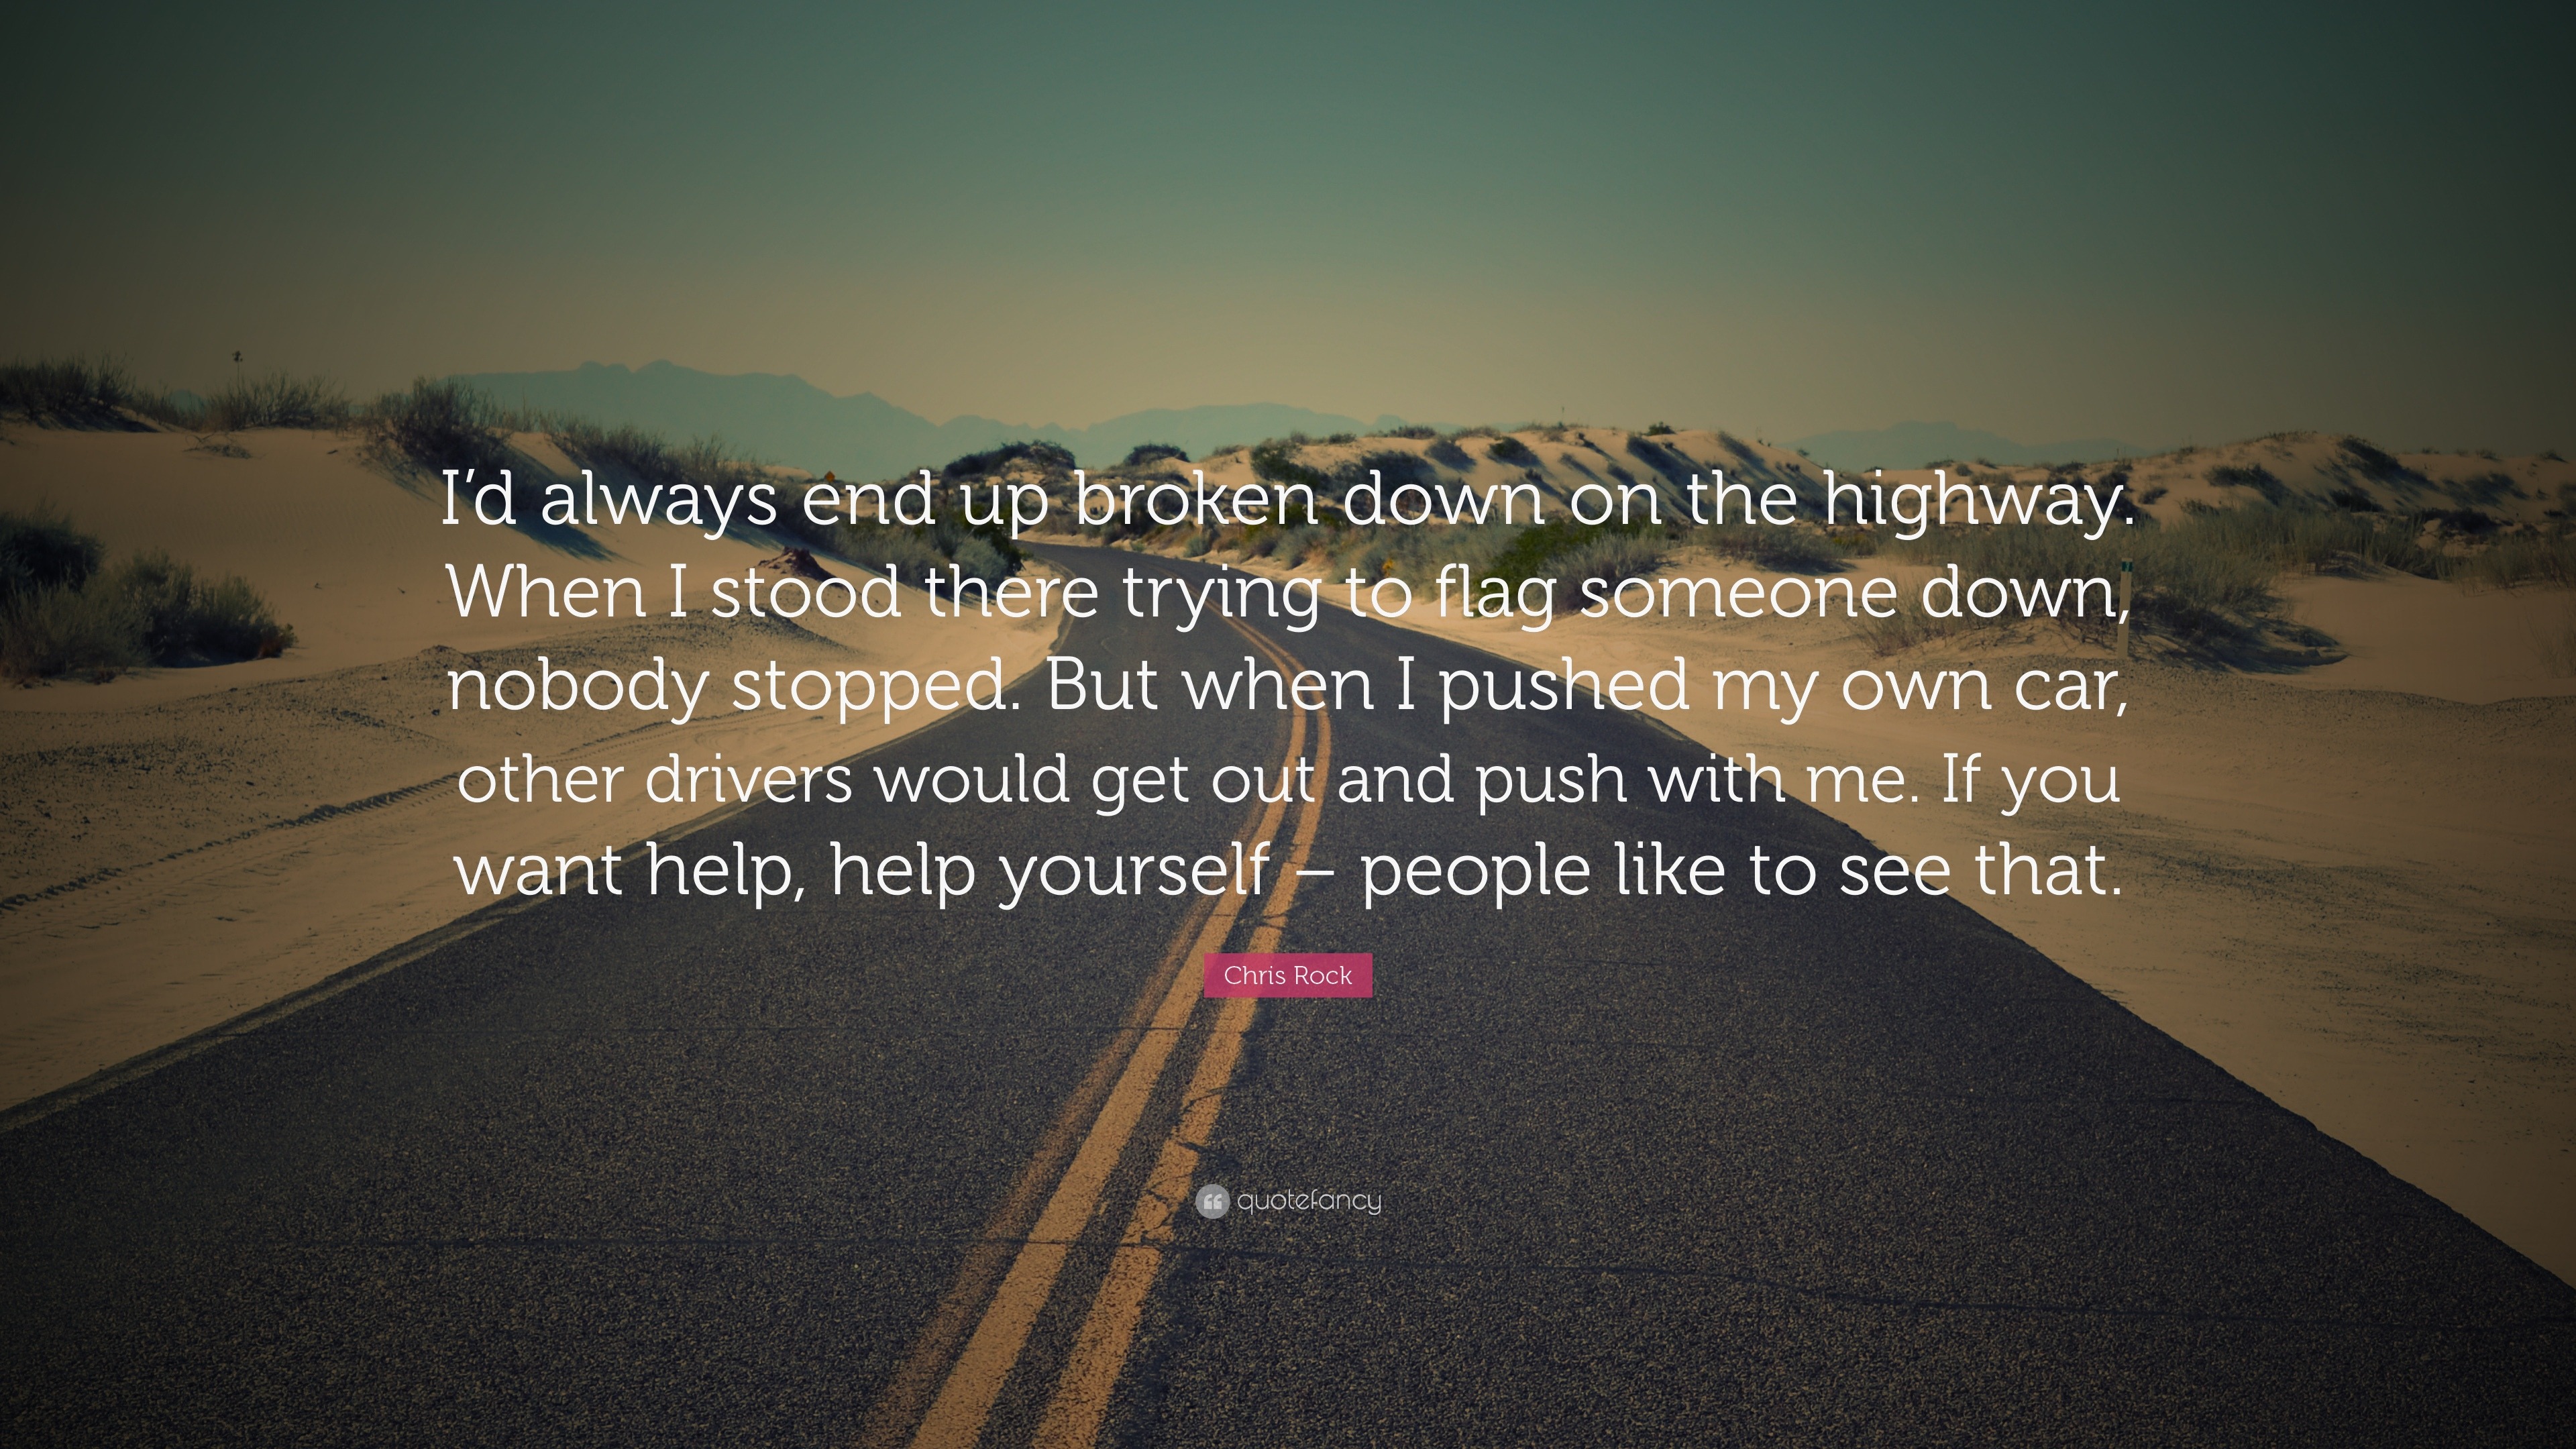 Chris Rock Quote “I d always end up broken down on the highway